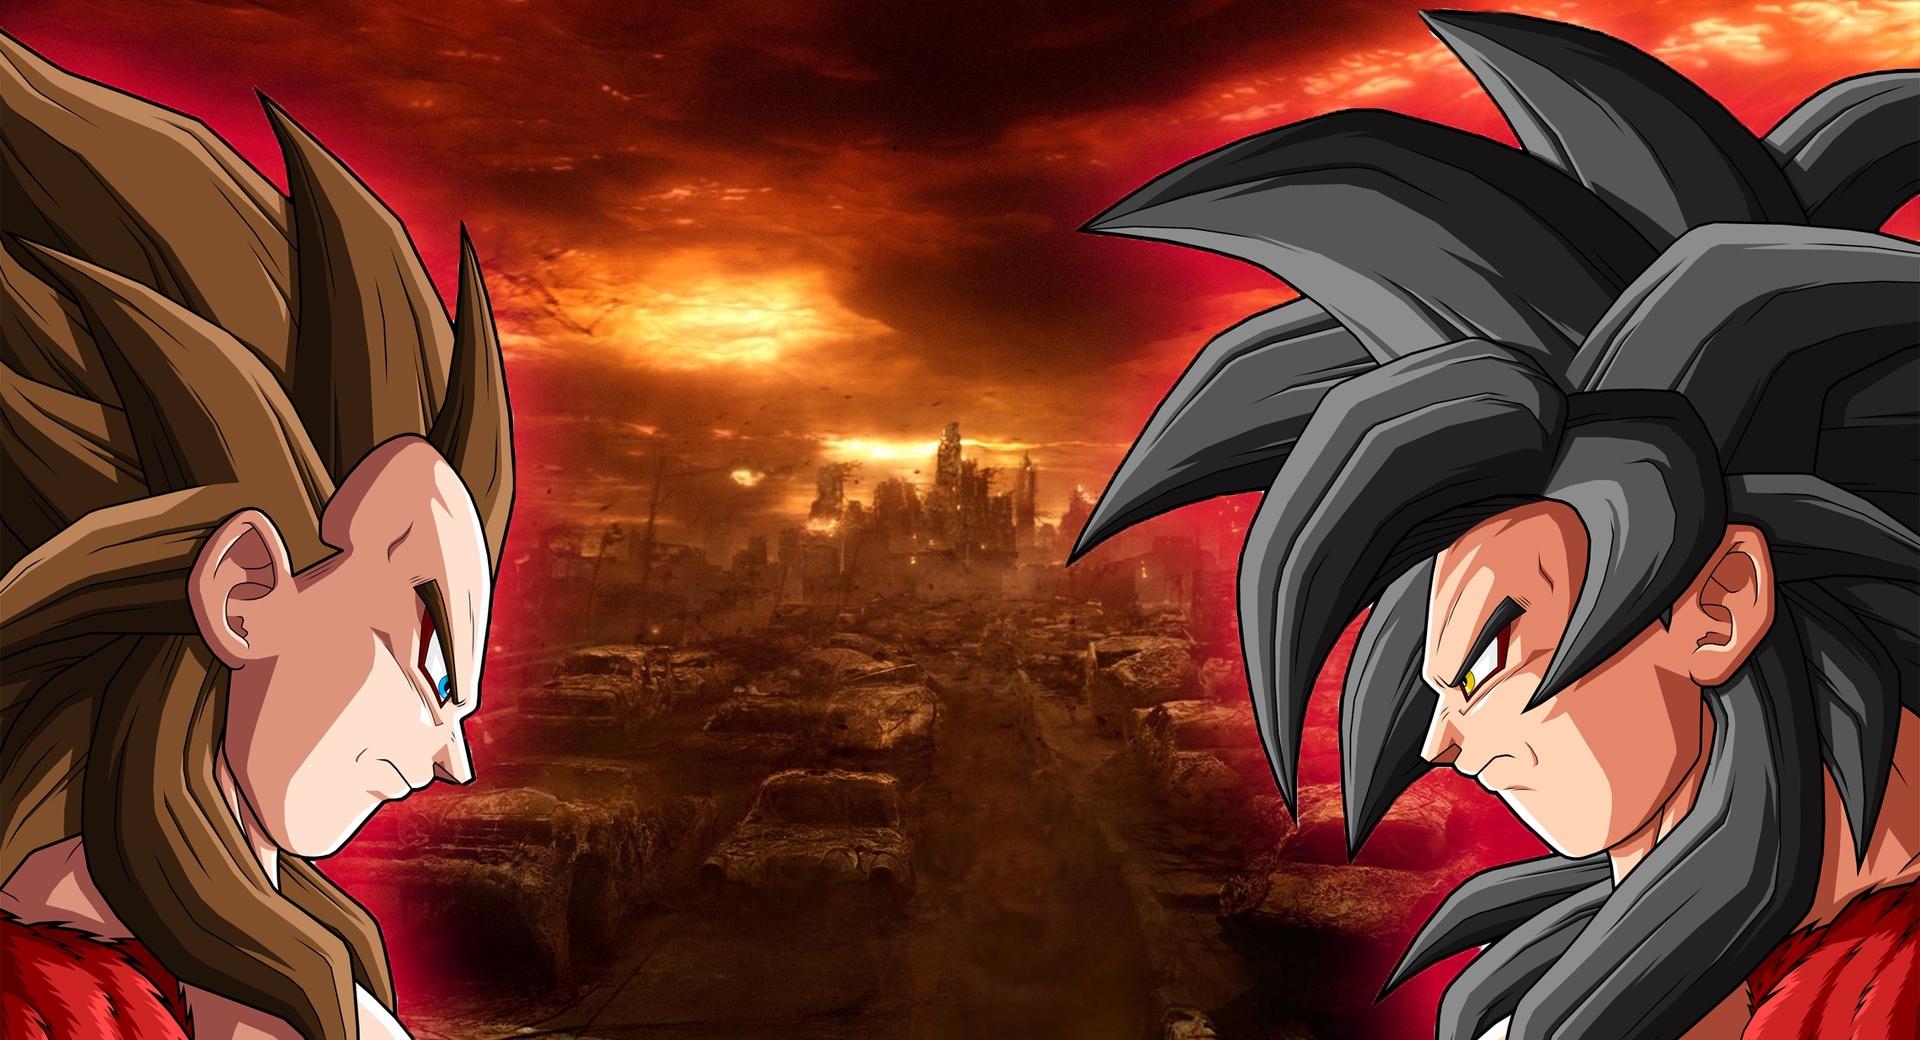 DBZ SS4 Goku vs Vegeta at 1600 x 1200 size wallpapers HD quality